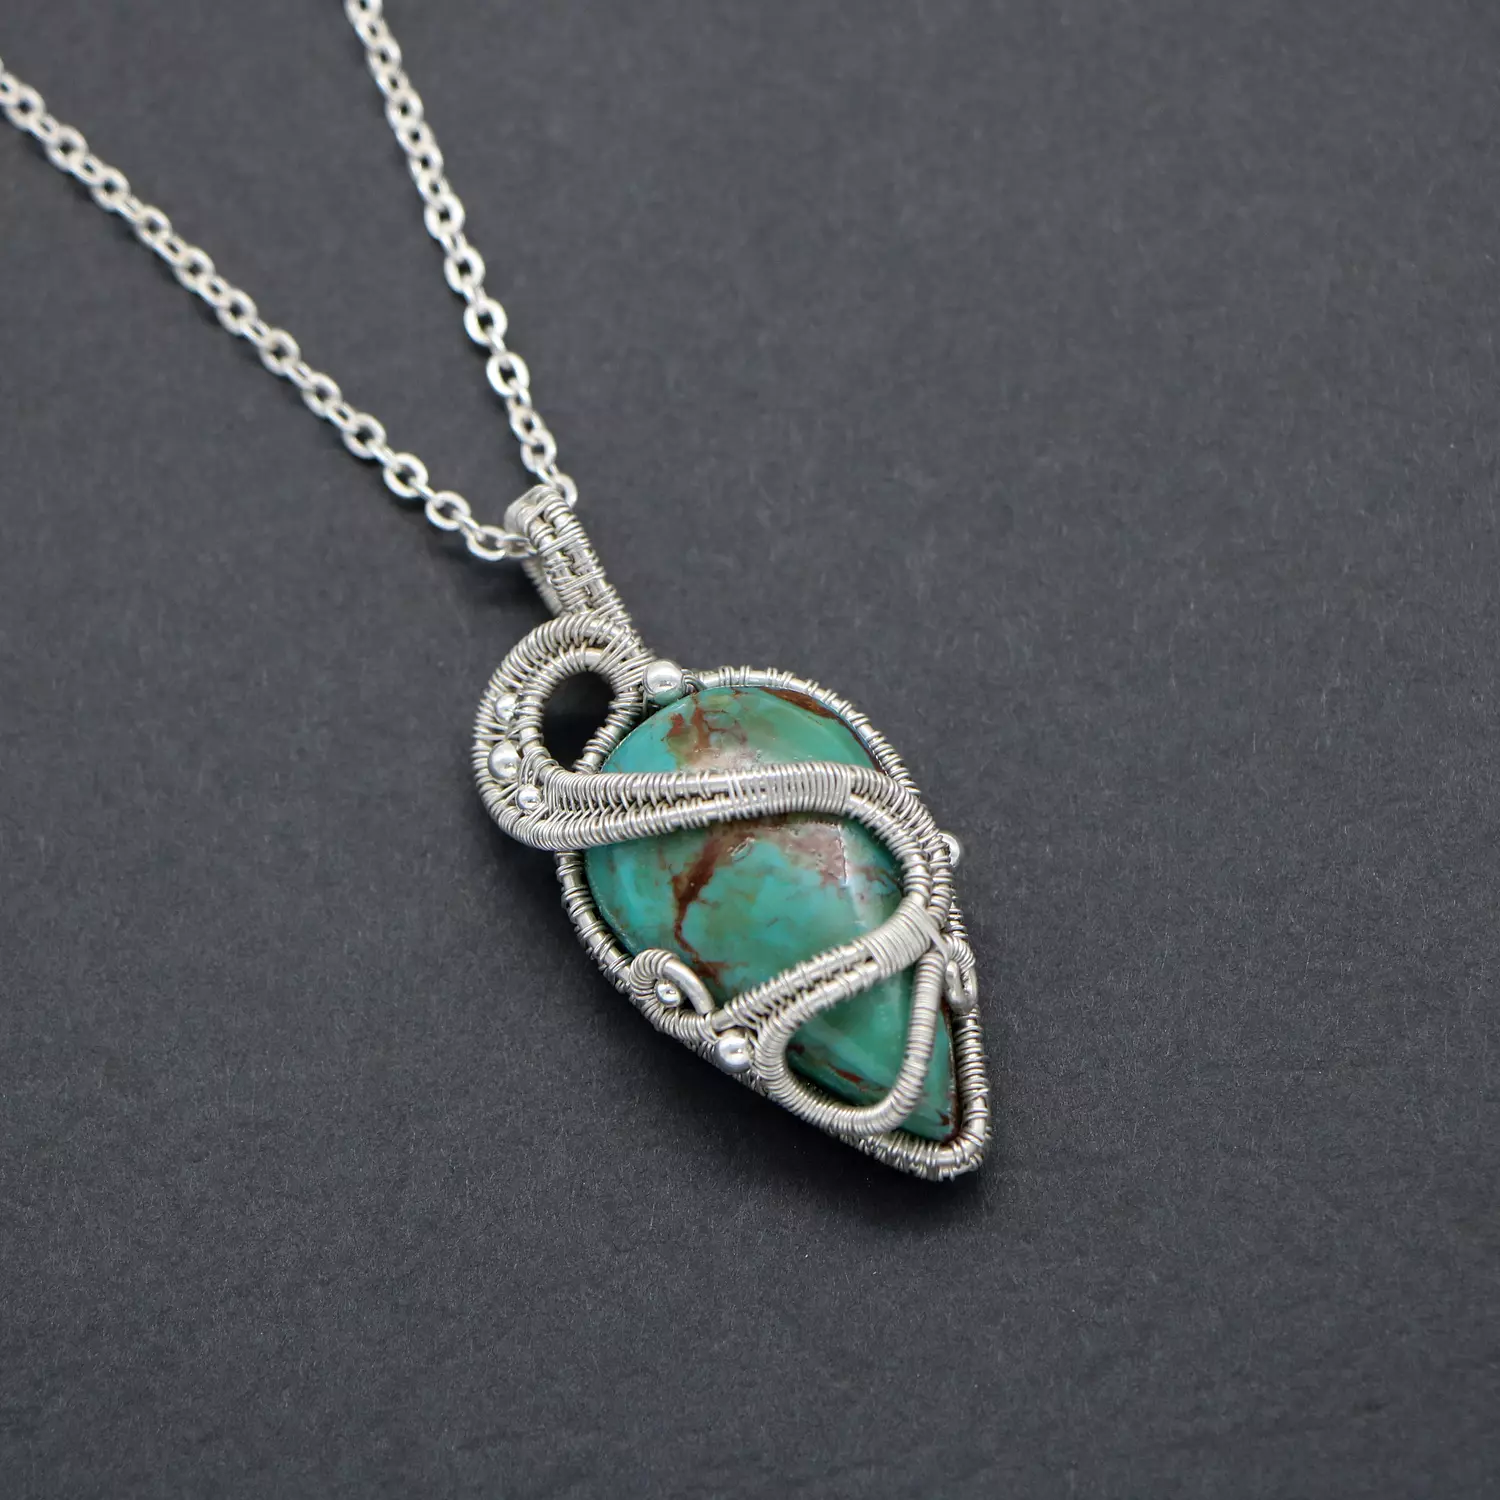 Pendant with turquoise gemstone. 0